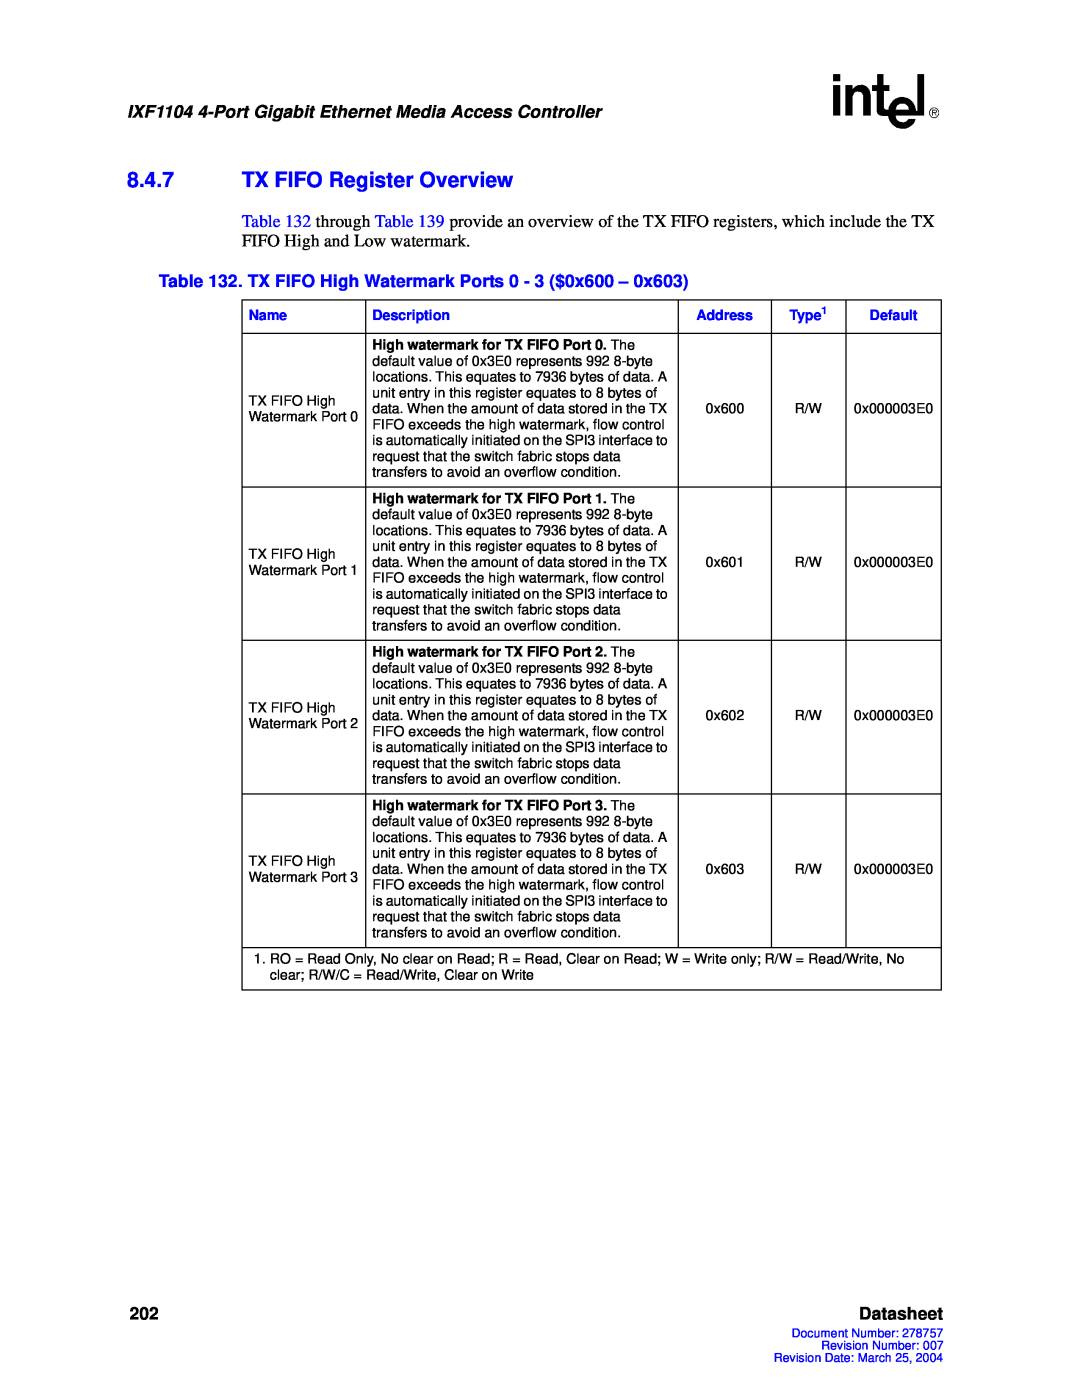 Intel IXF1104 manual 8.4.7TX FIFO Register Overview, Datasheet, High watermark for TX FIFO Port 0. The 